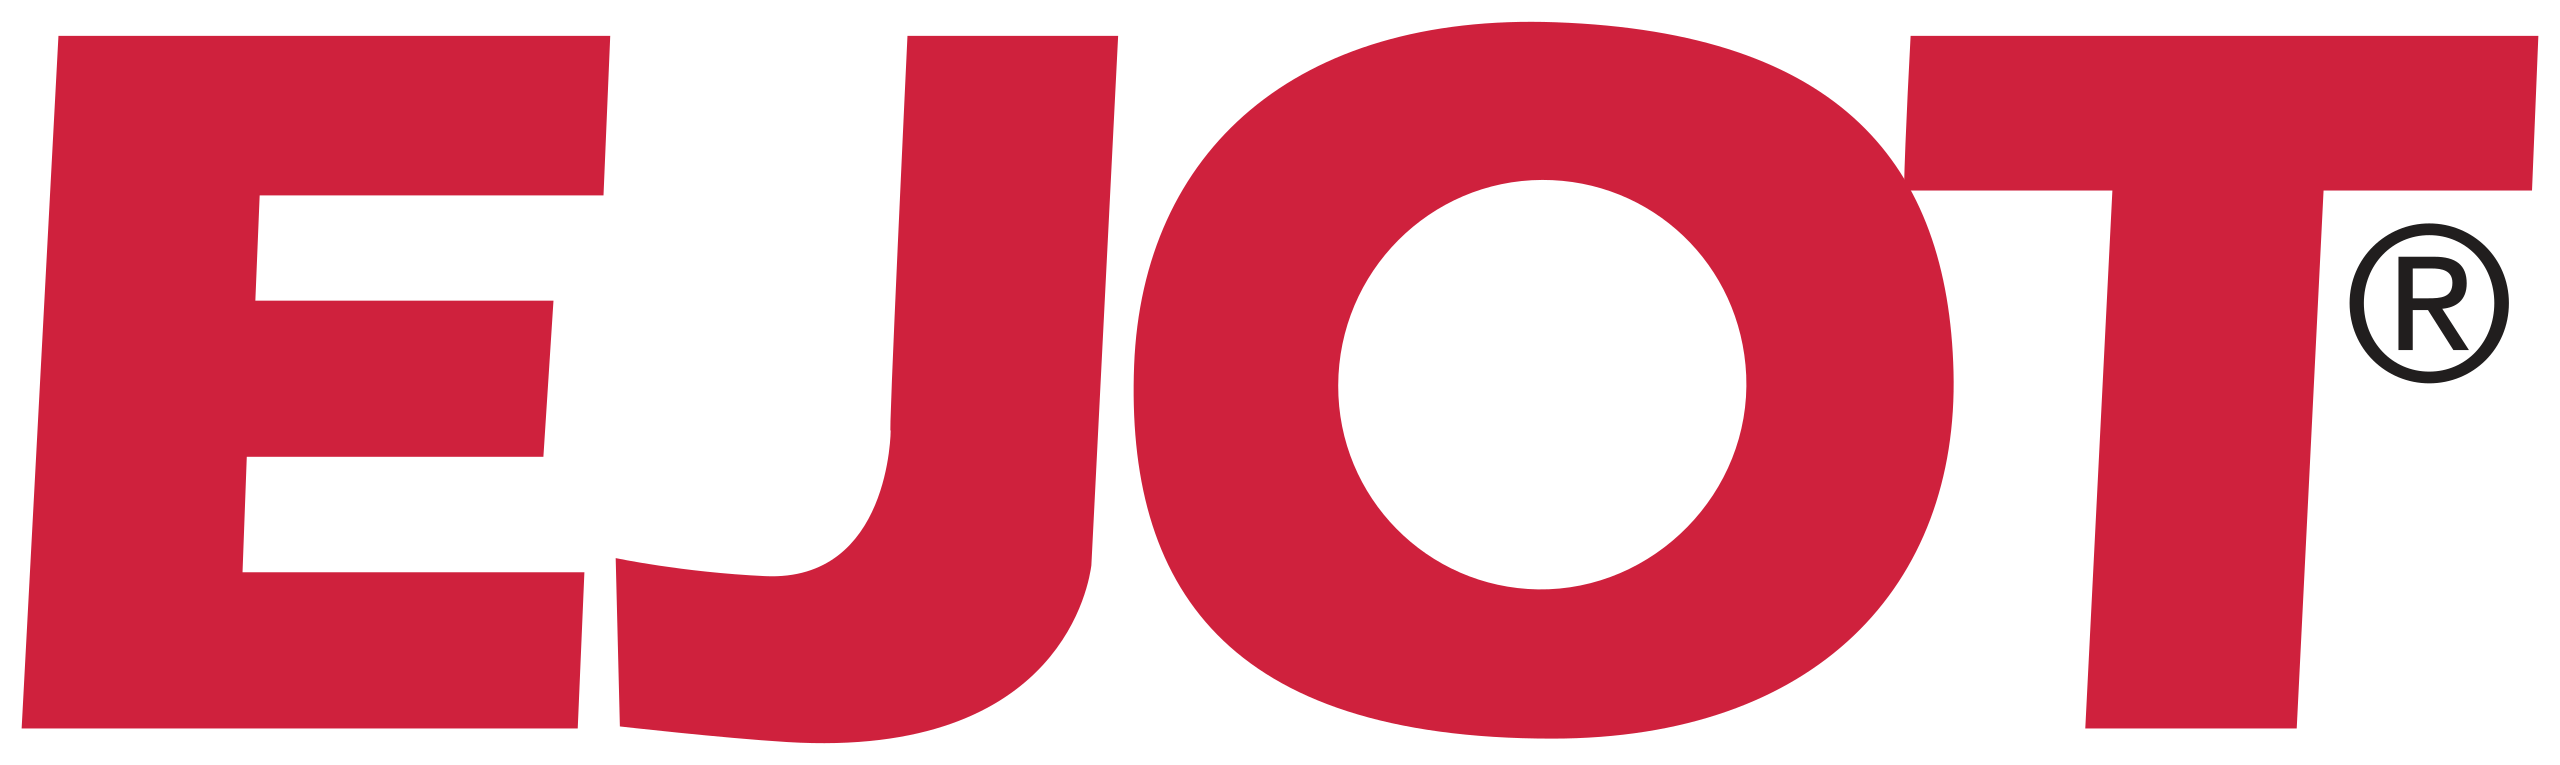 2560px EJOT logo.svg